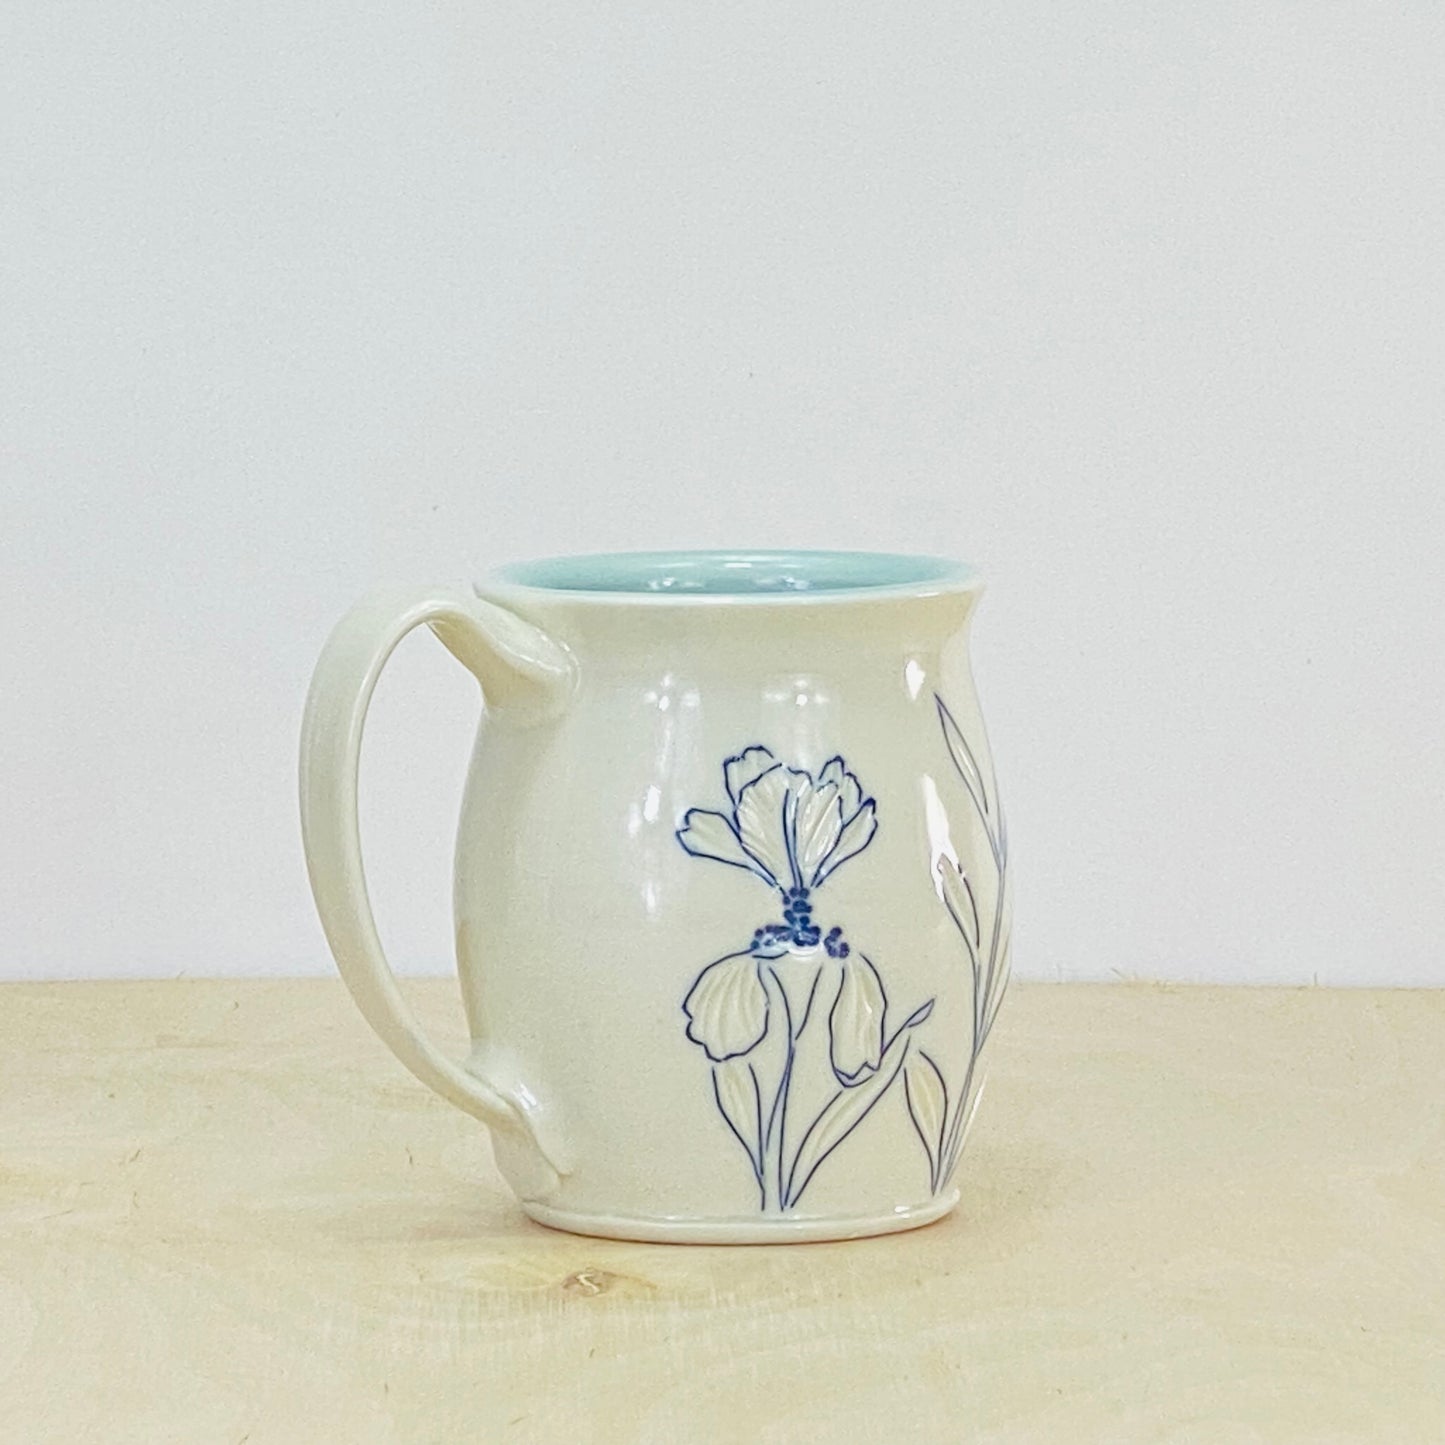 Mug with Flowers2-iris/foxglove